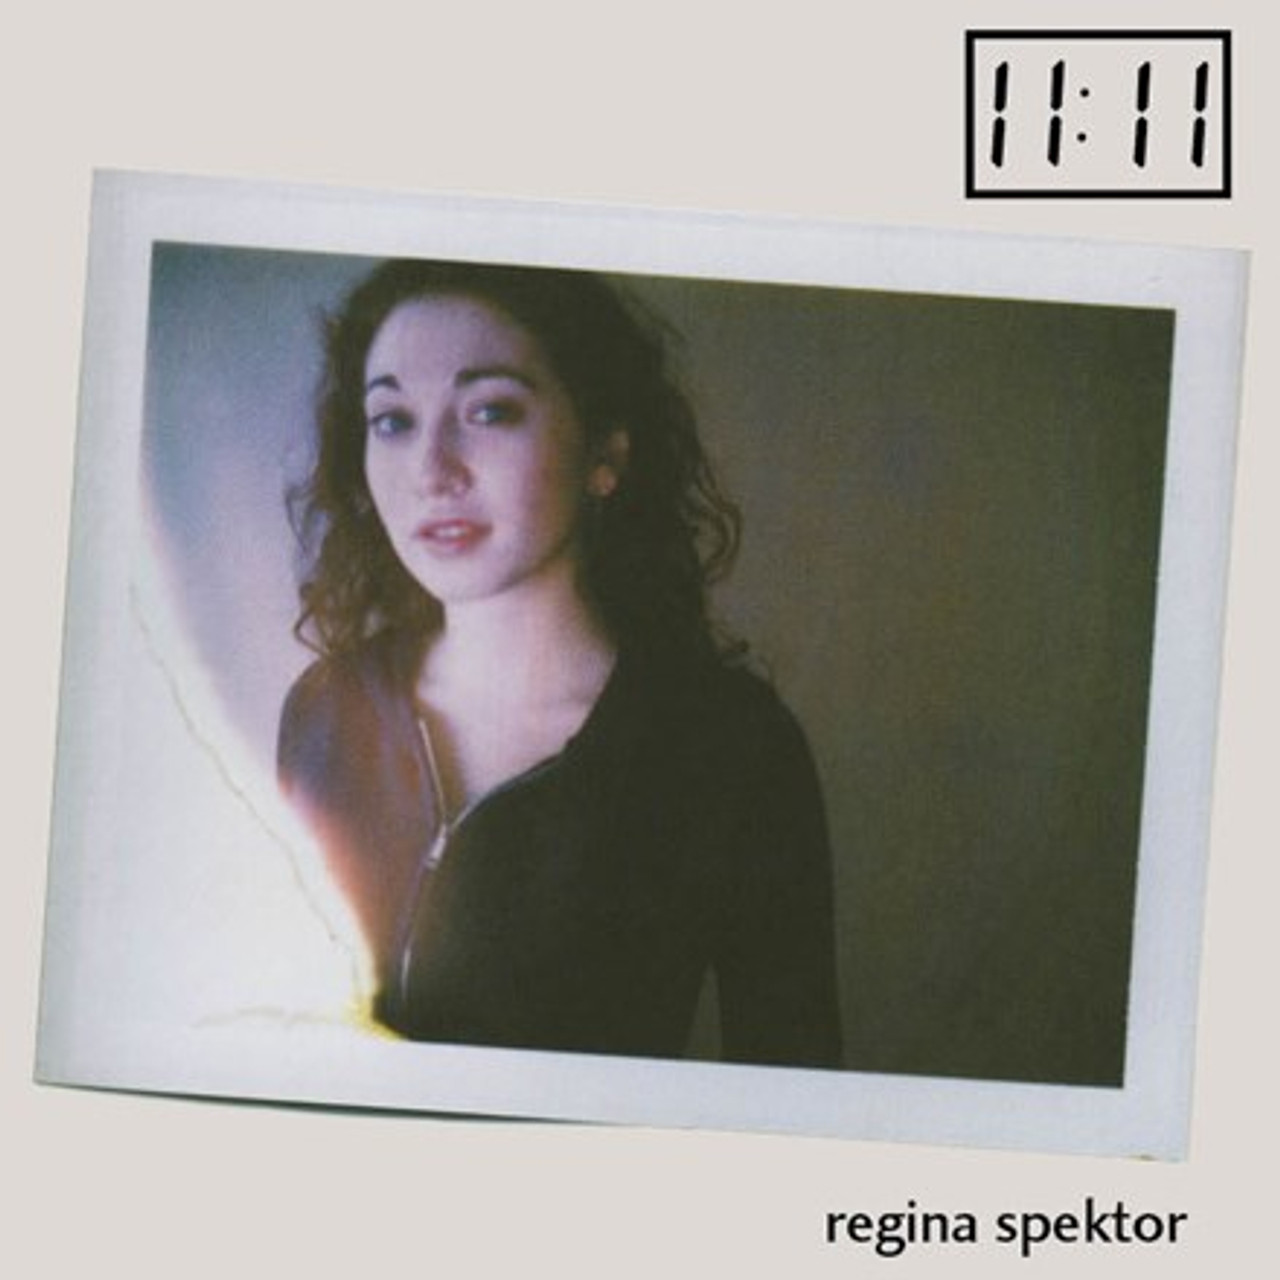 Regina Spektor - 11:11 (Vinyl LP) - Music Direct